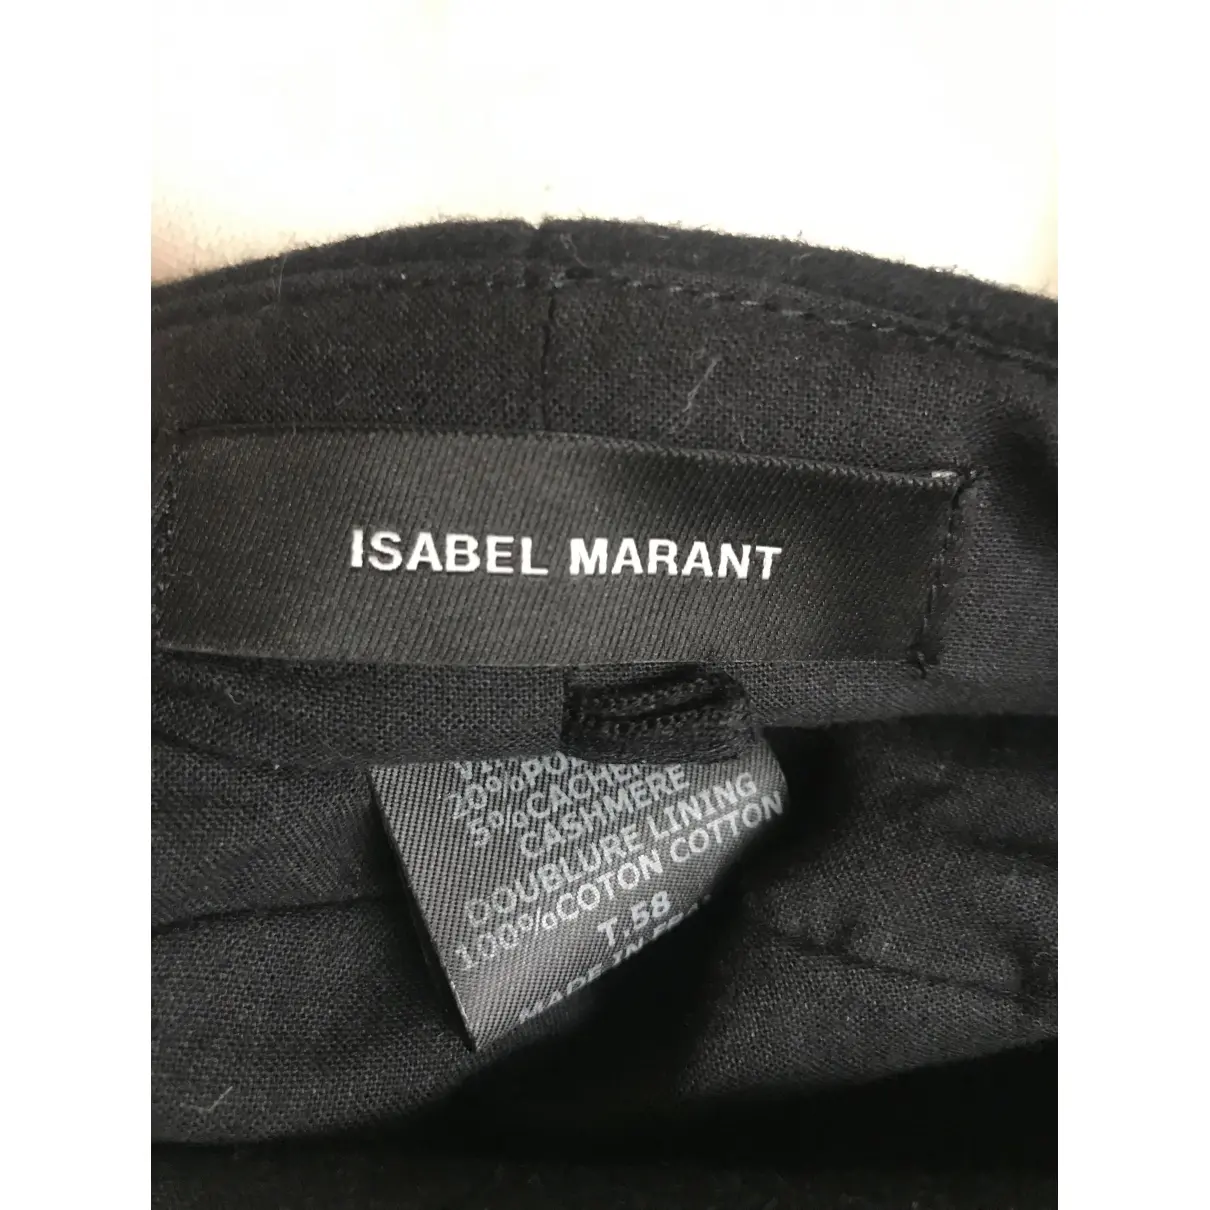 Buy Isabel Marant Wool cap online